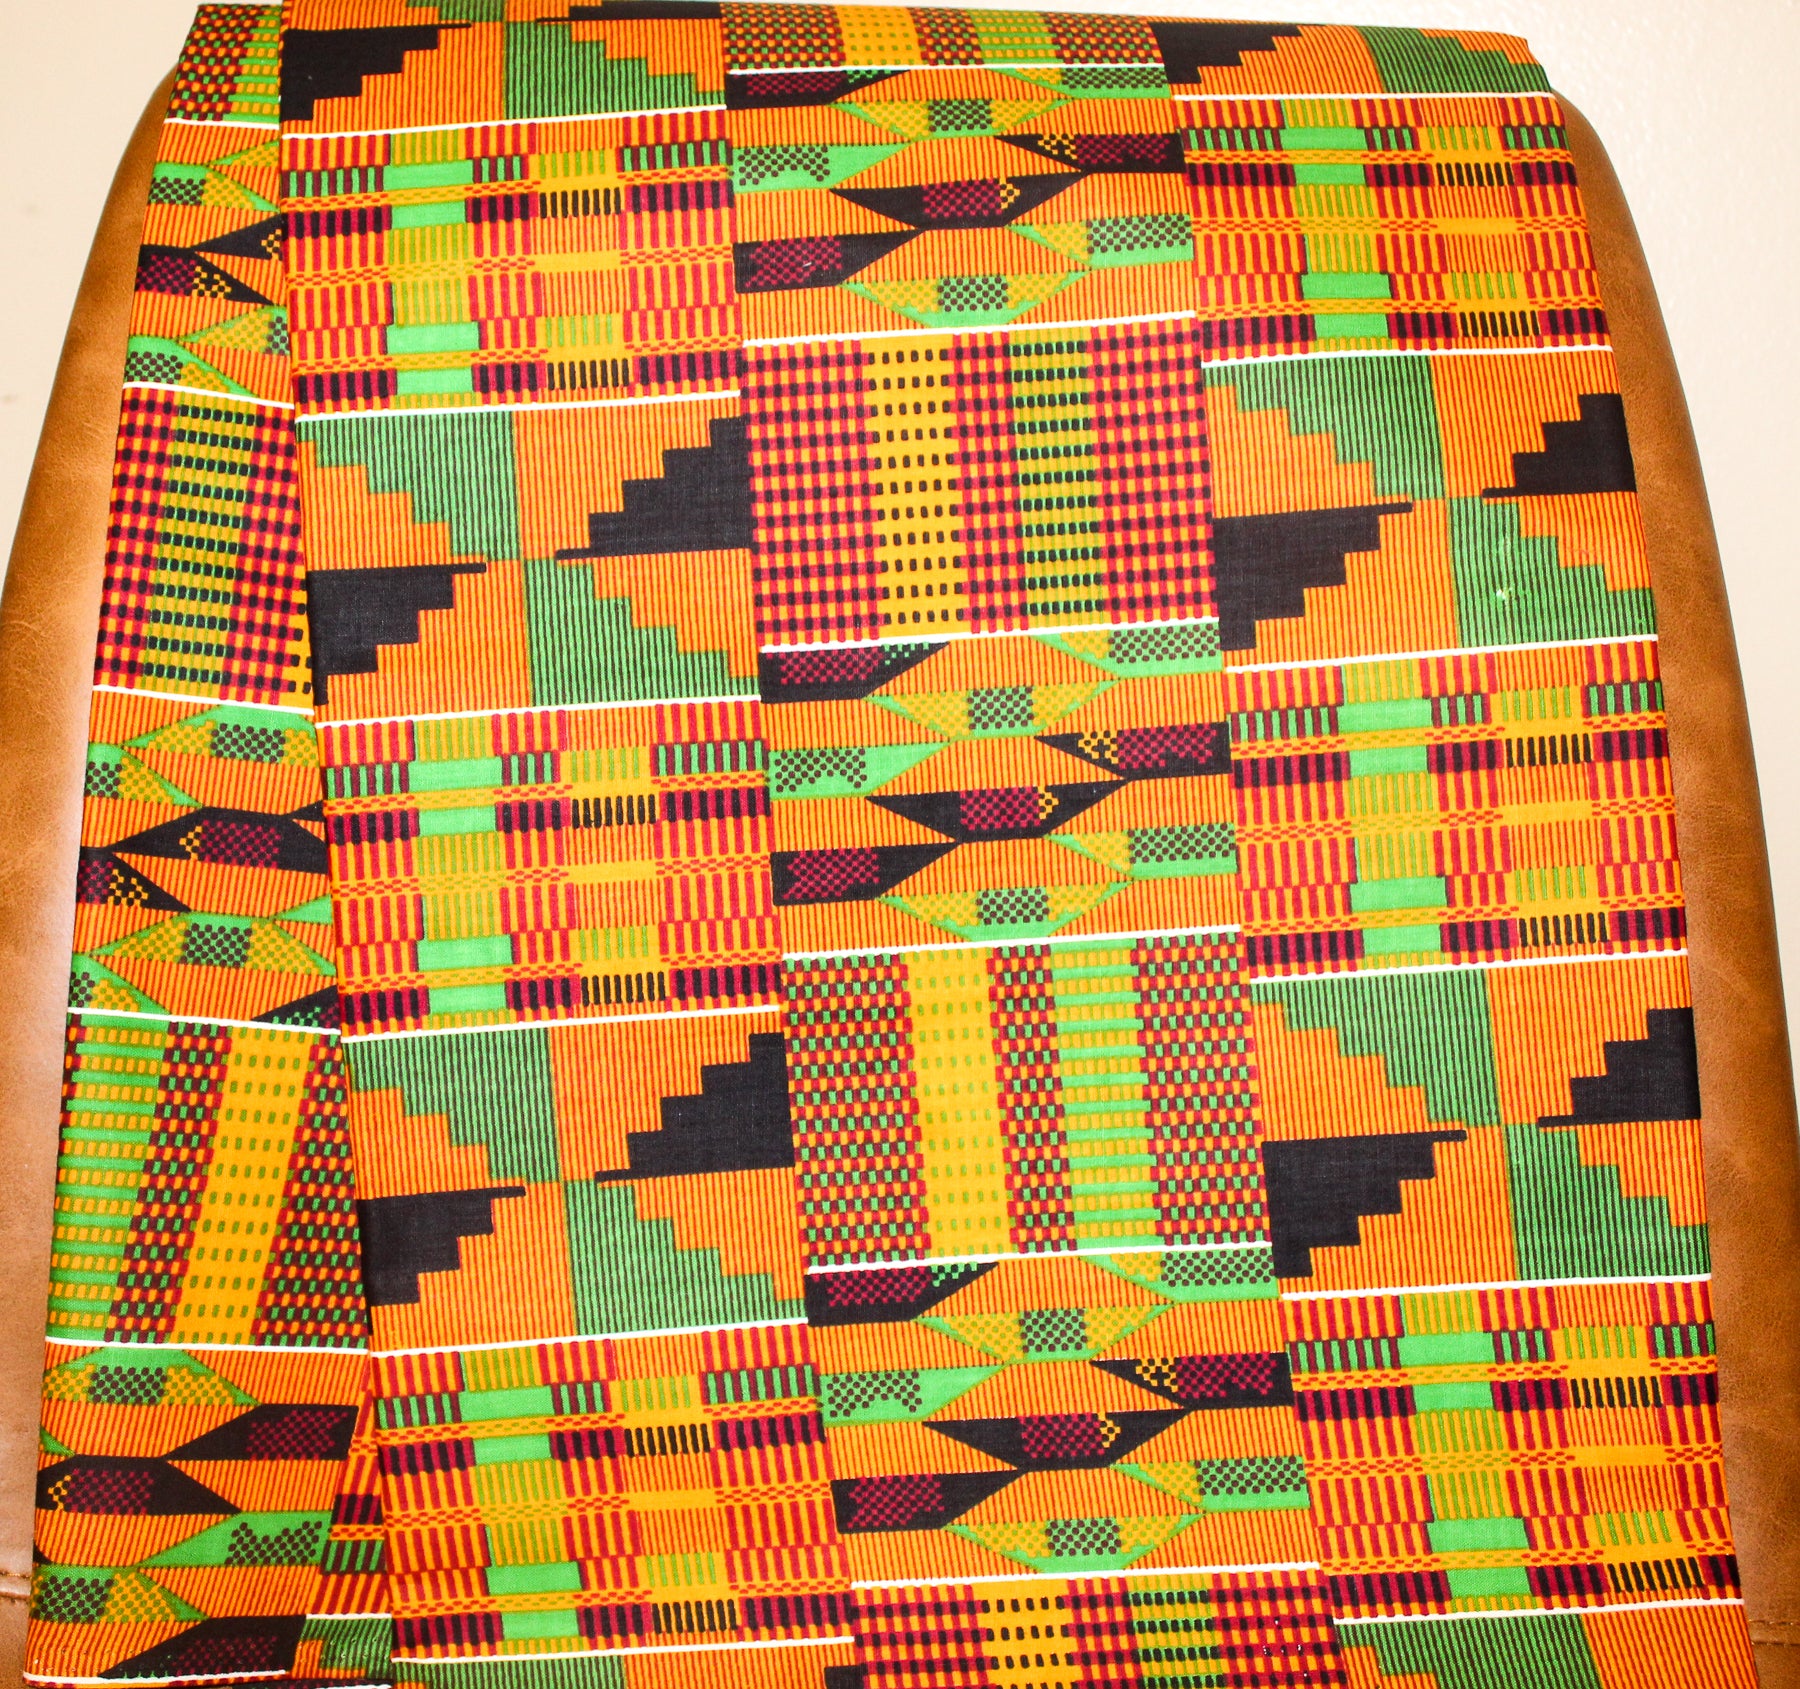 african kente fabrics